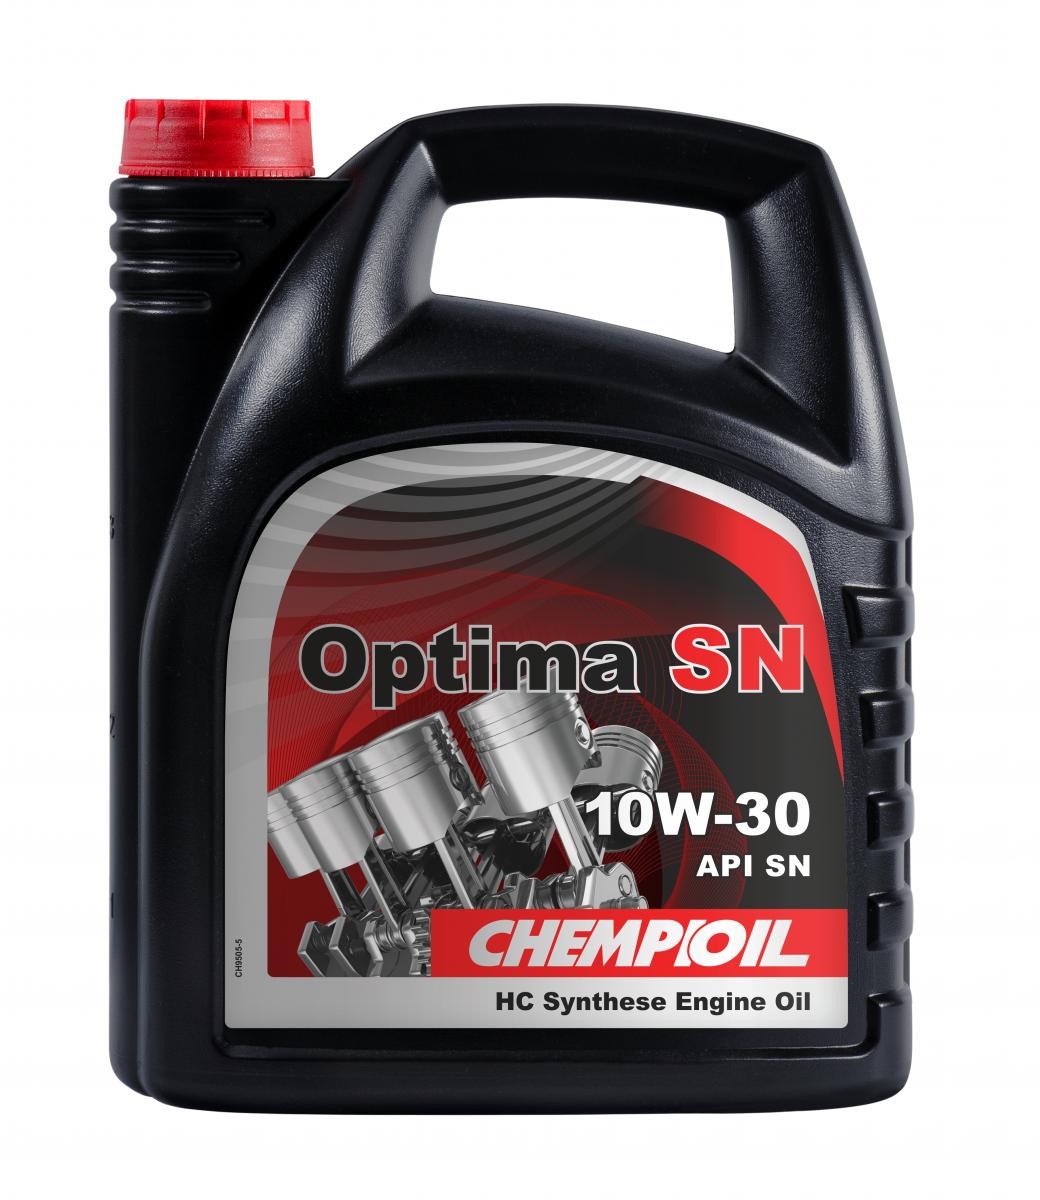 CHEMPIOIL Optima, SN 10W-30, 5l Motor oil CH9505-5 buy